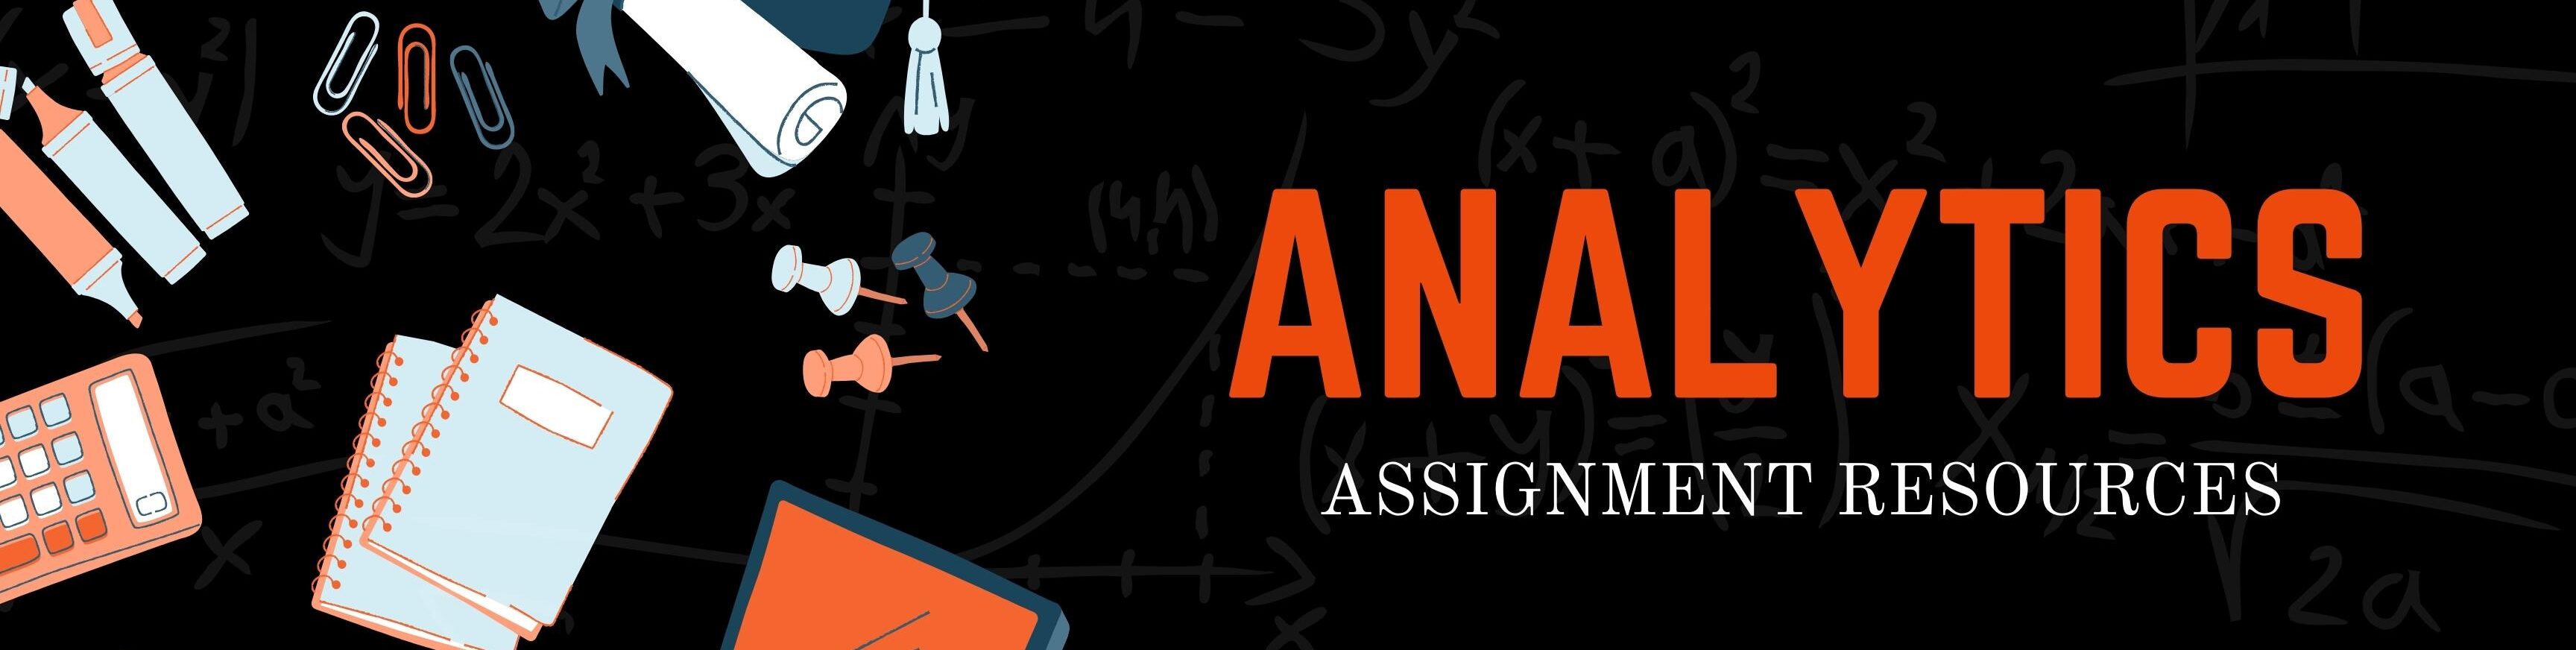 Analytics Assignments